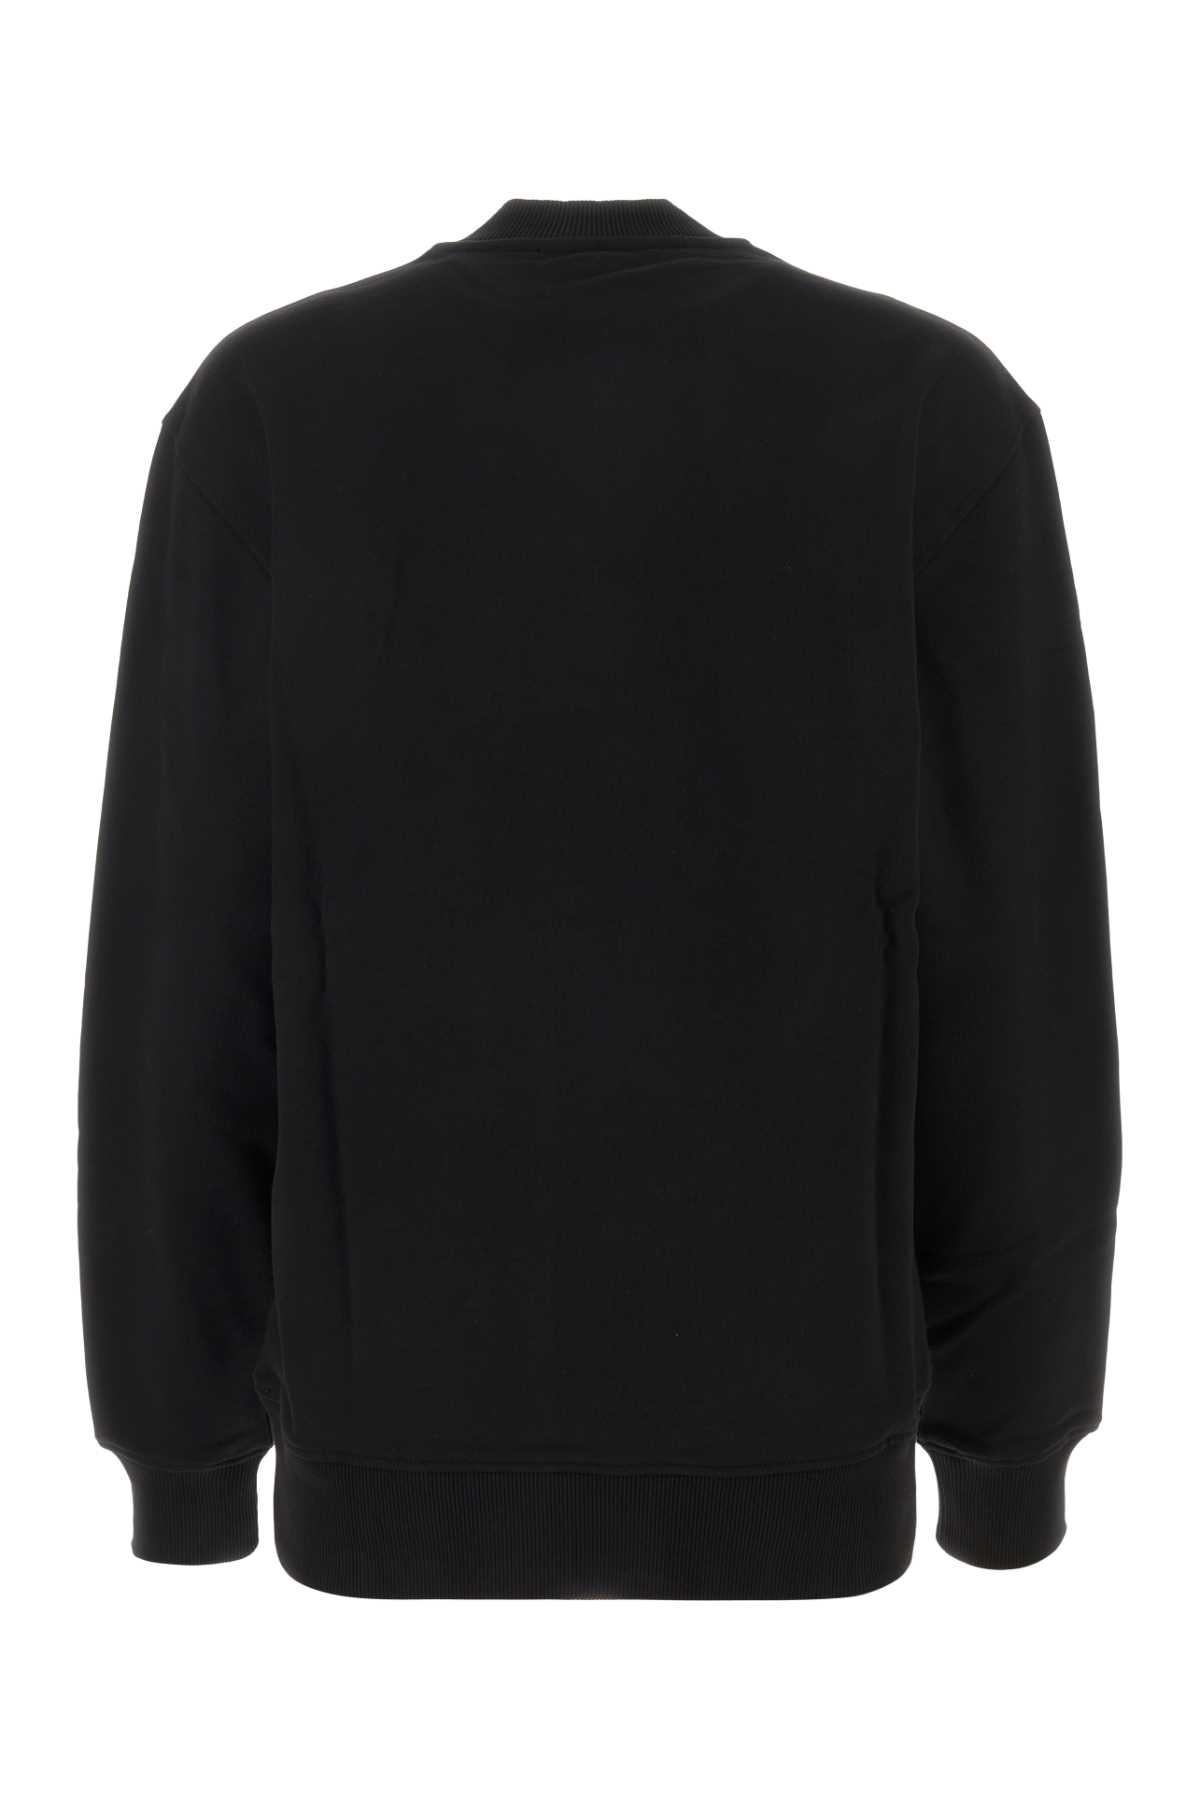 Versace Jeans Couture Black Cotton Sweatshirt In G89